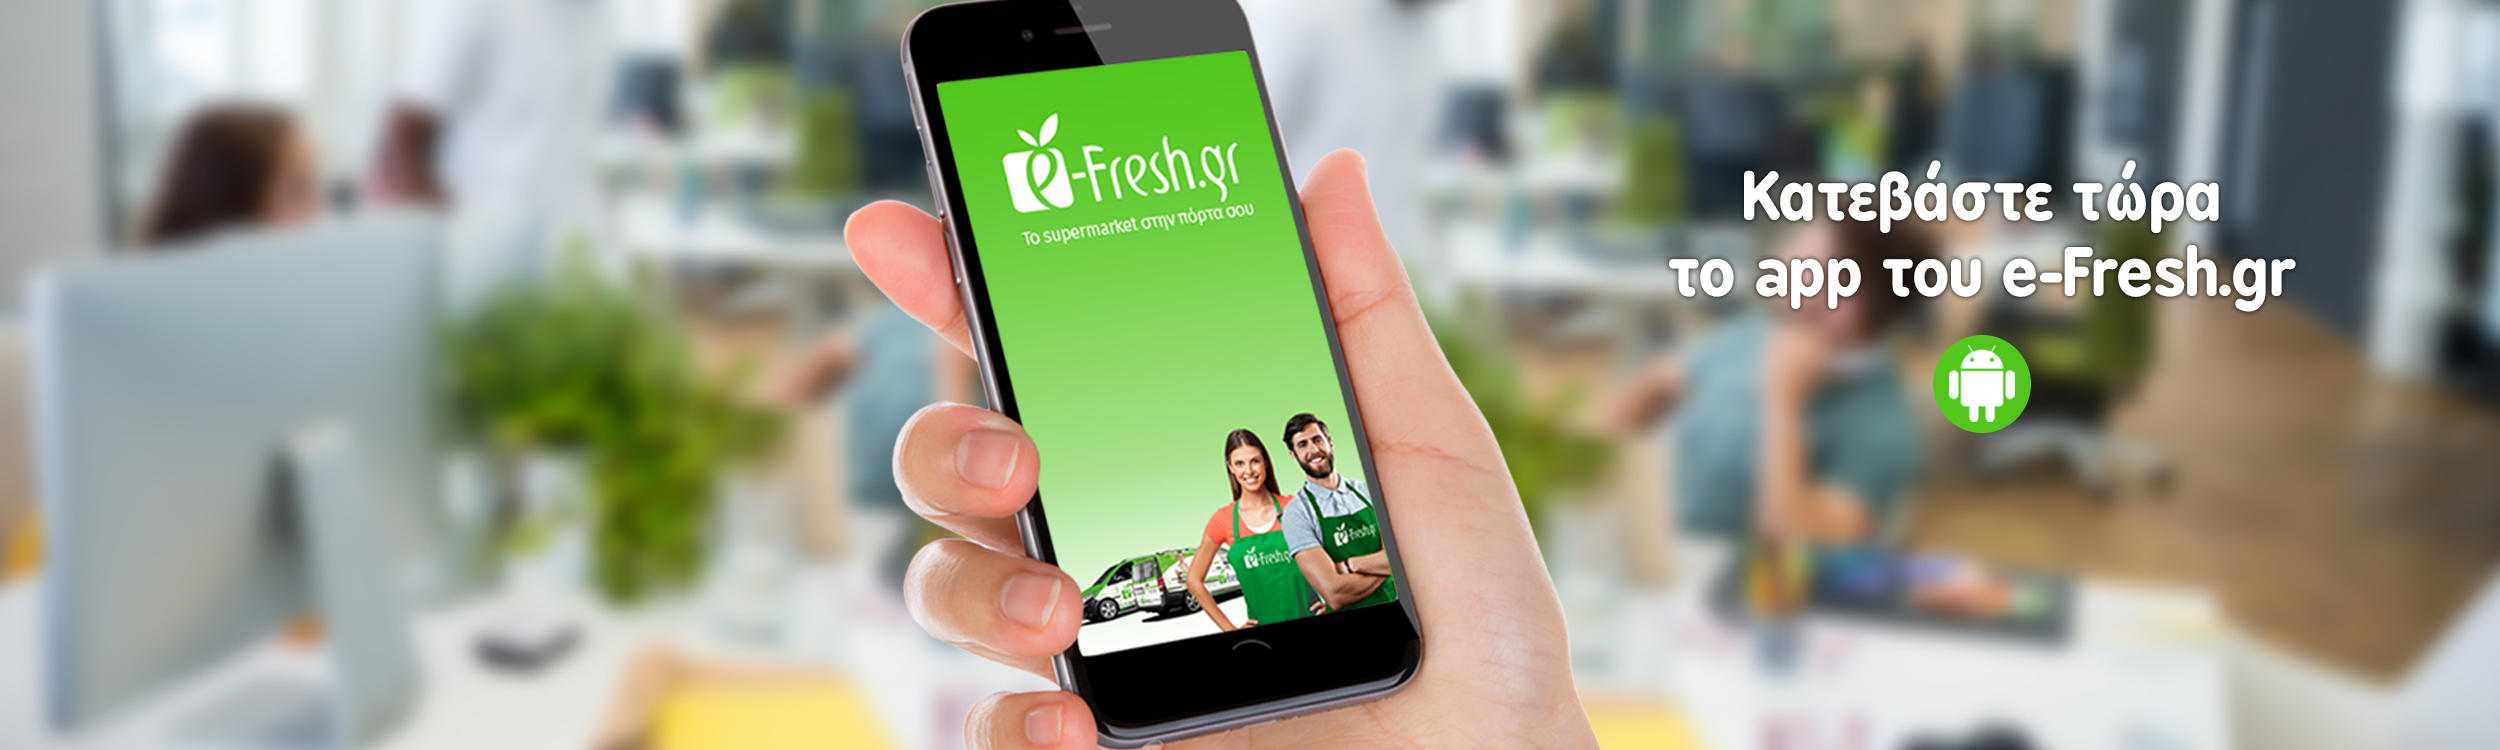 application του e-Fresh.gr για android